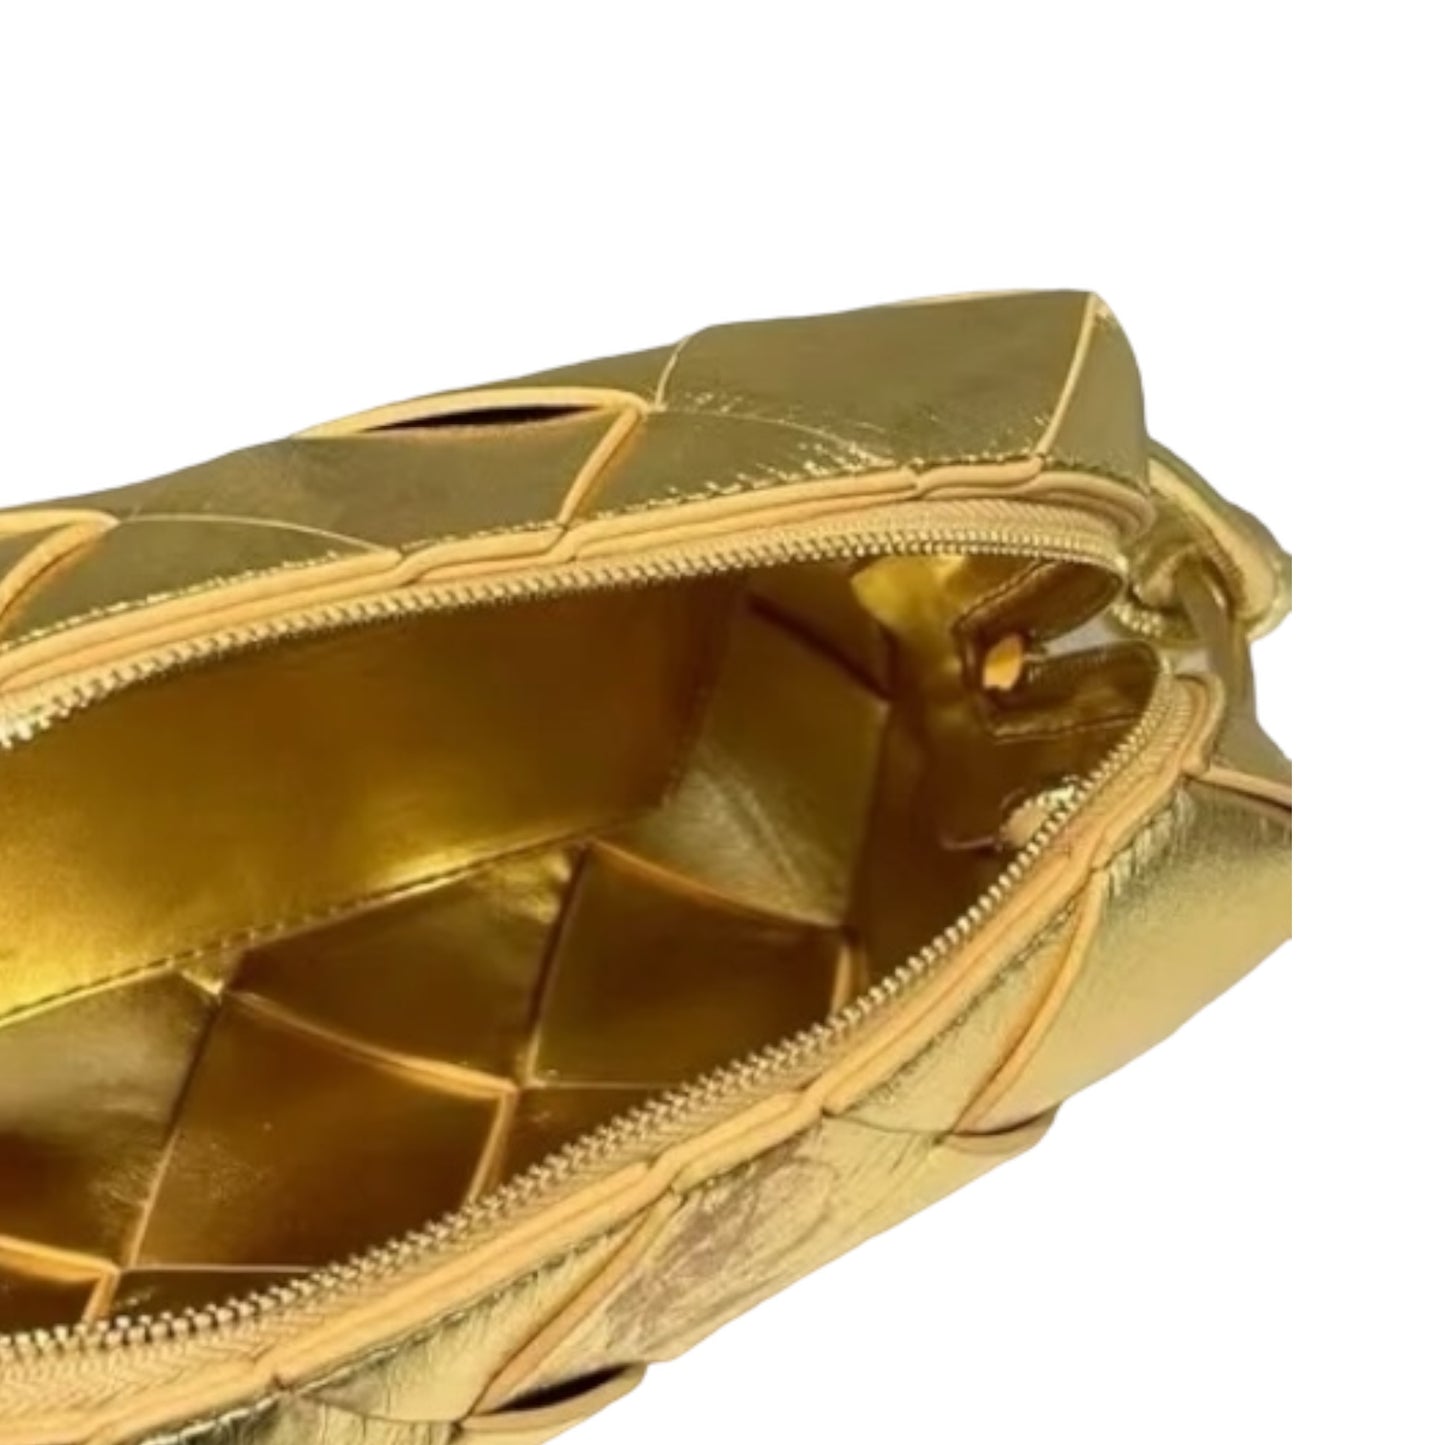 BELLE CROSSBODY BAG METALLIC GOLD - PREORDER JUNE DELIVERY